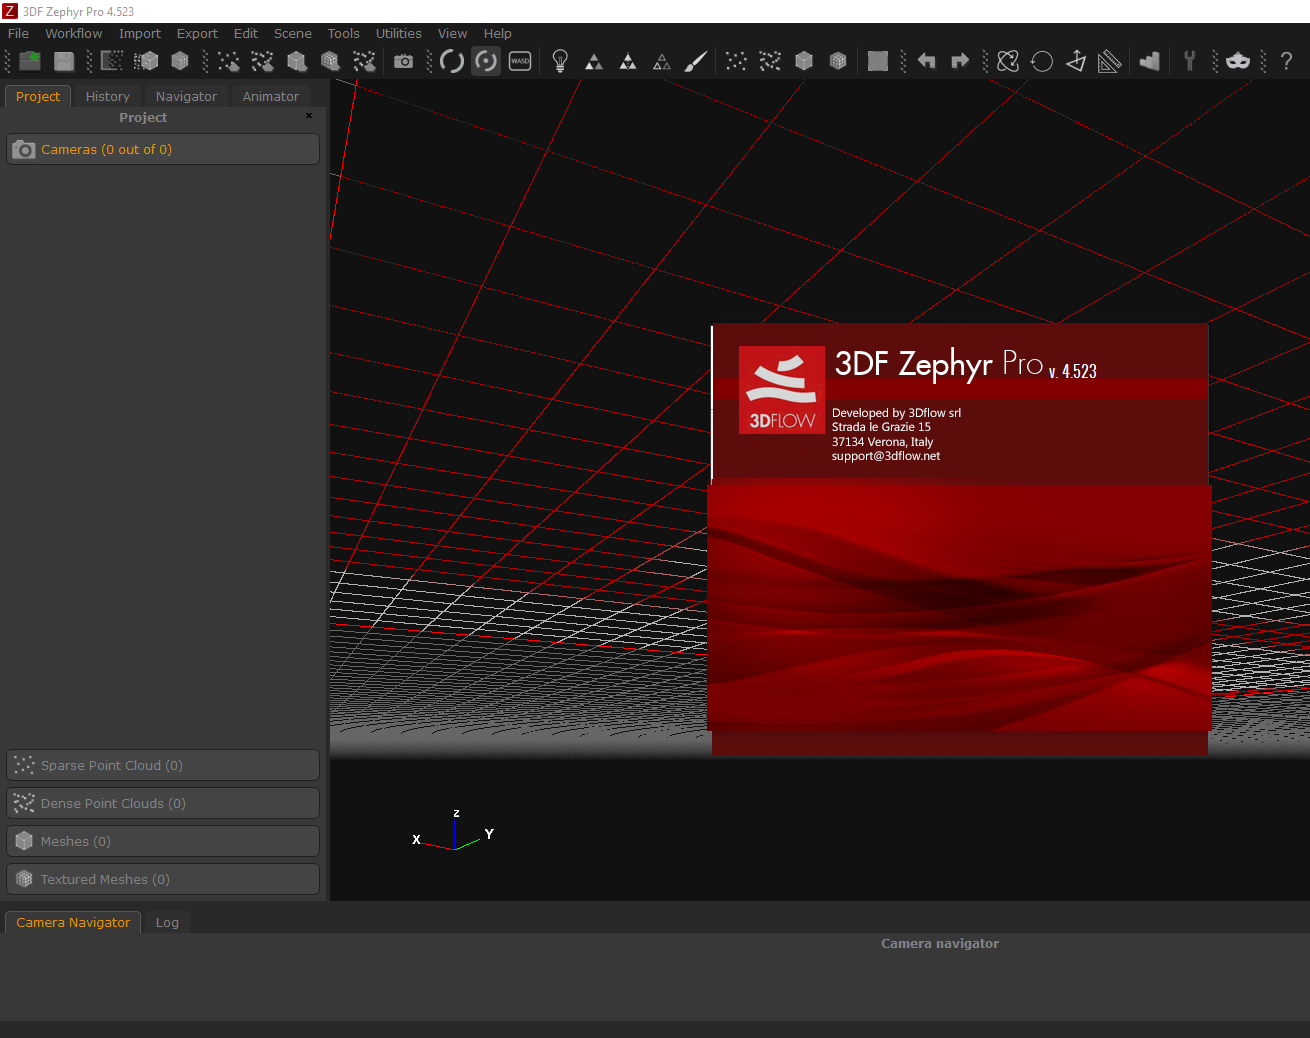 3DF Zephyr PRO 7.021 / Lite / Aerial download the last version for windows